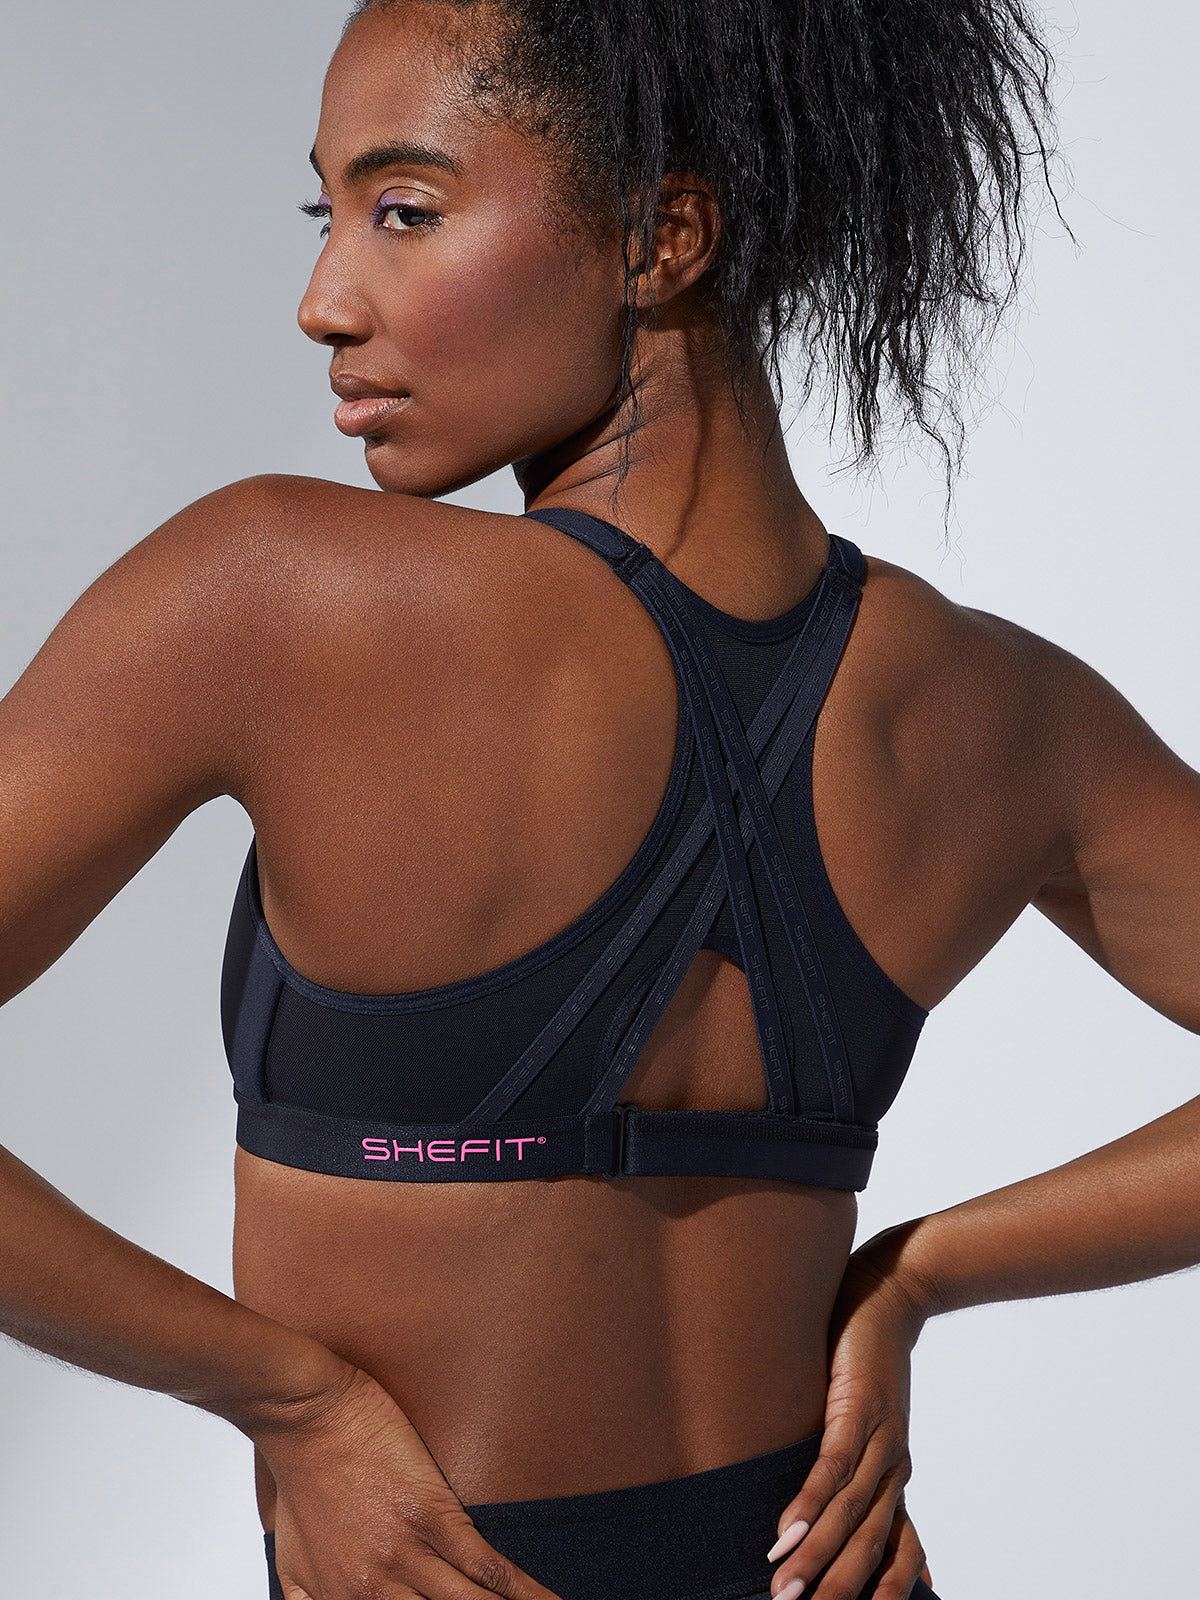 New!!! Dark Raisin Flex Sports Bra from @shefit 😍 this color is  everything! #shefit #weareshefit